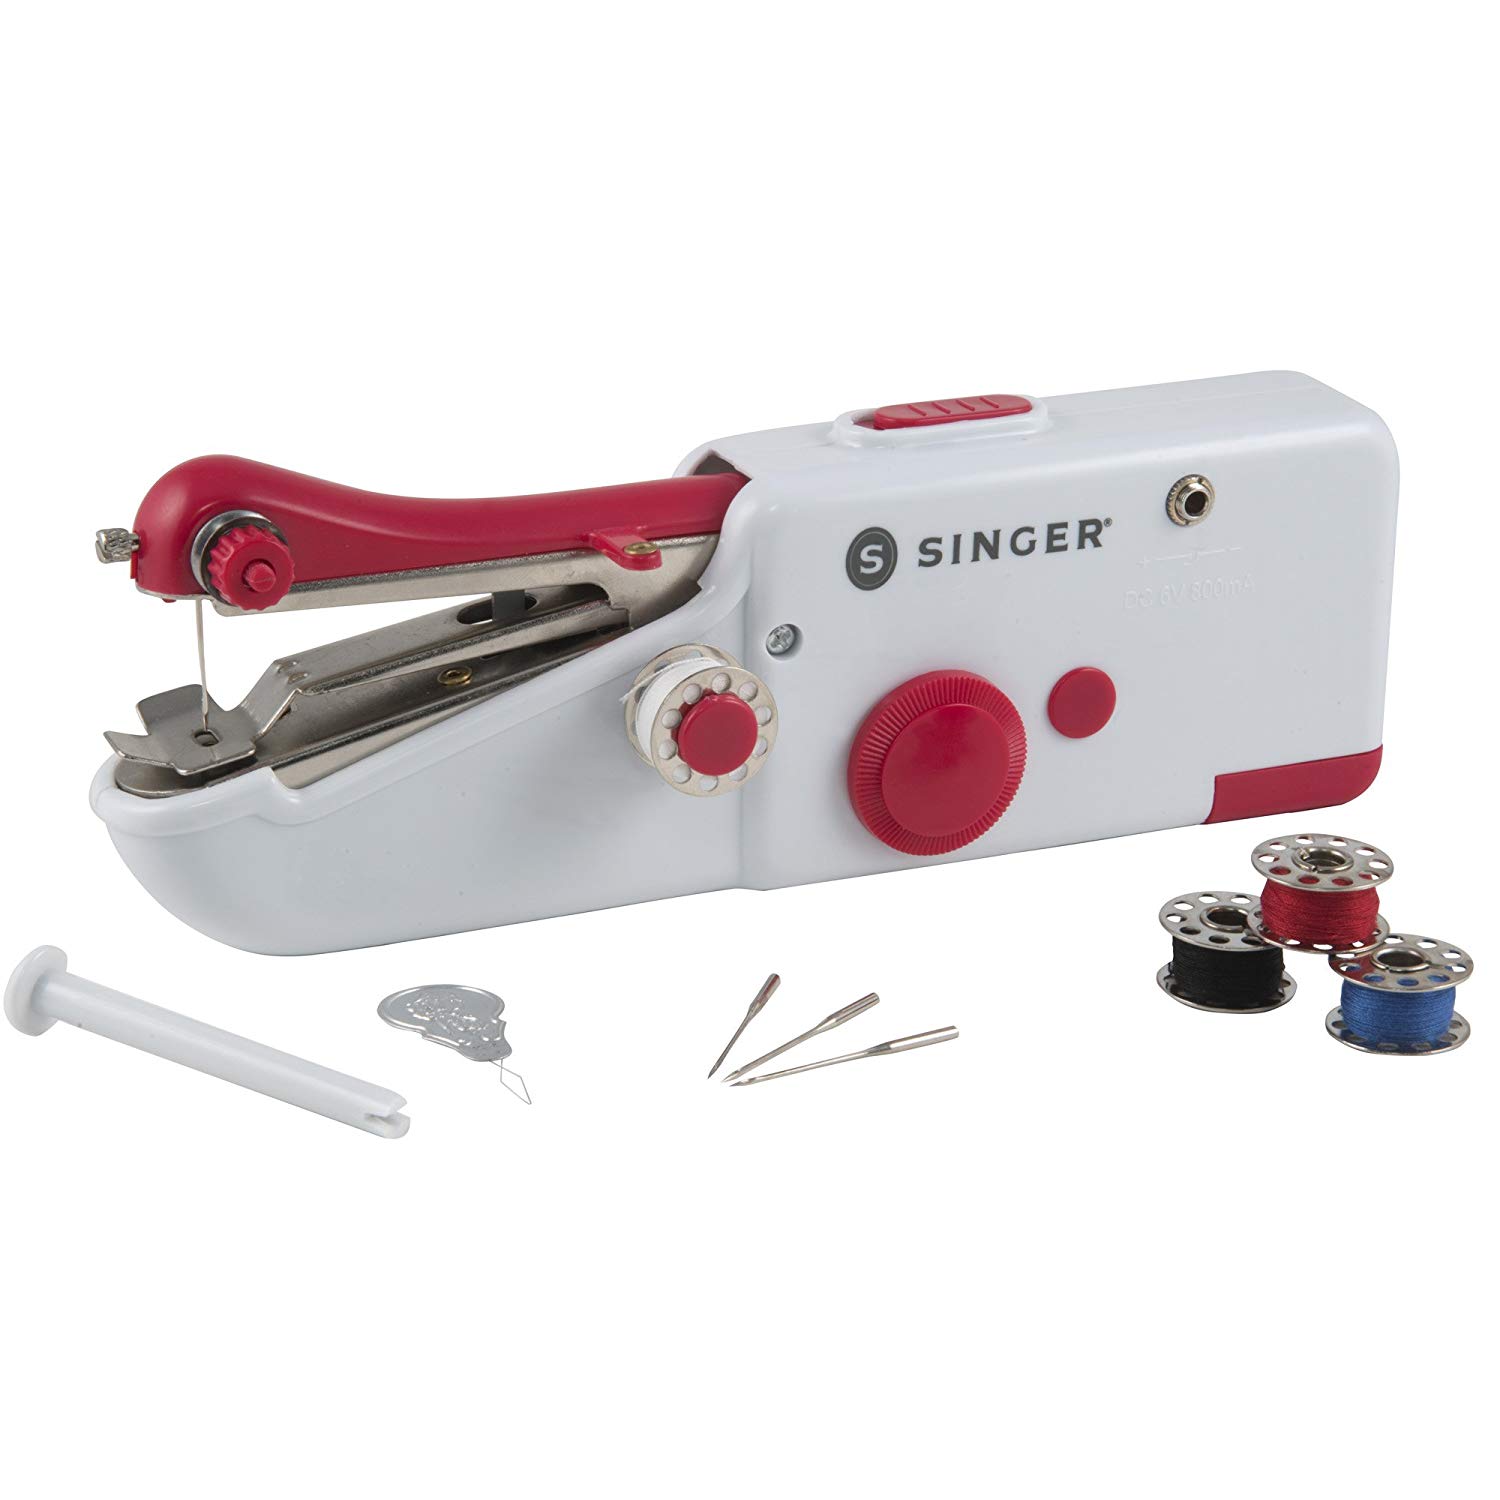 SINGER Handheld Sewing Machine.jpg